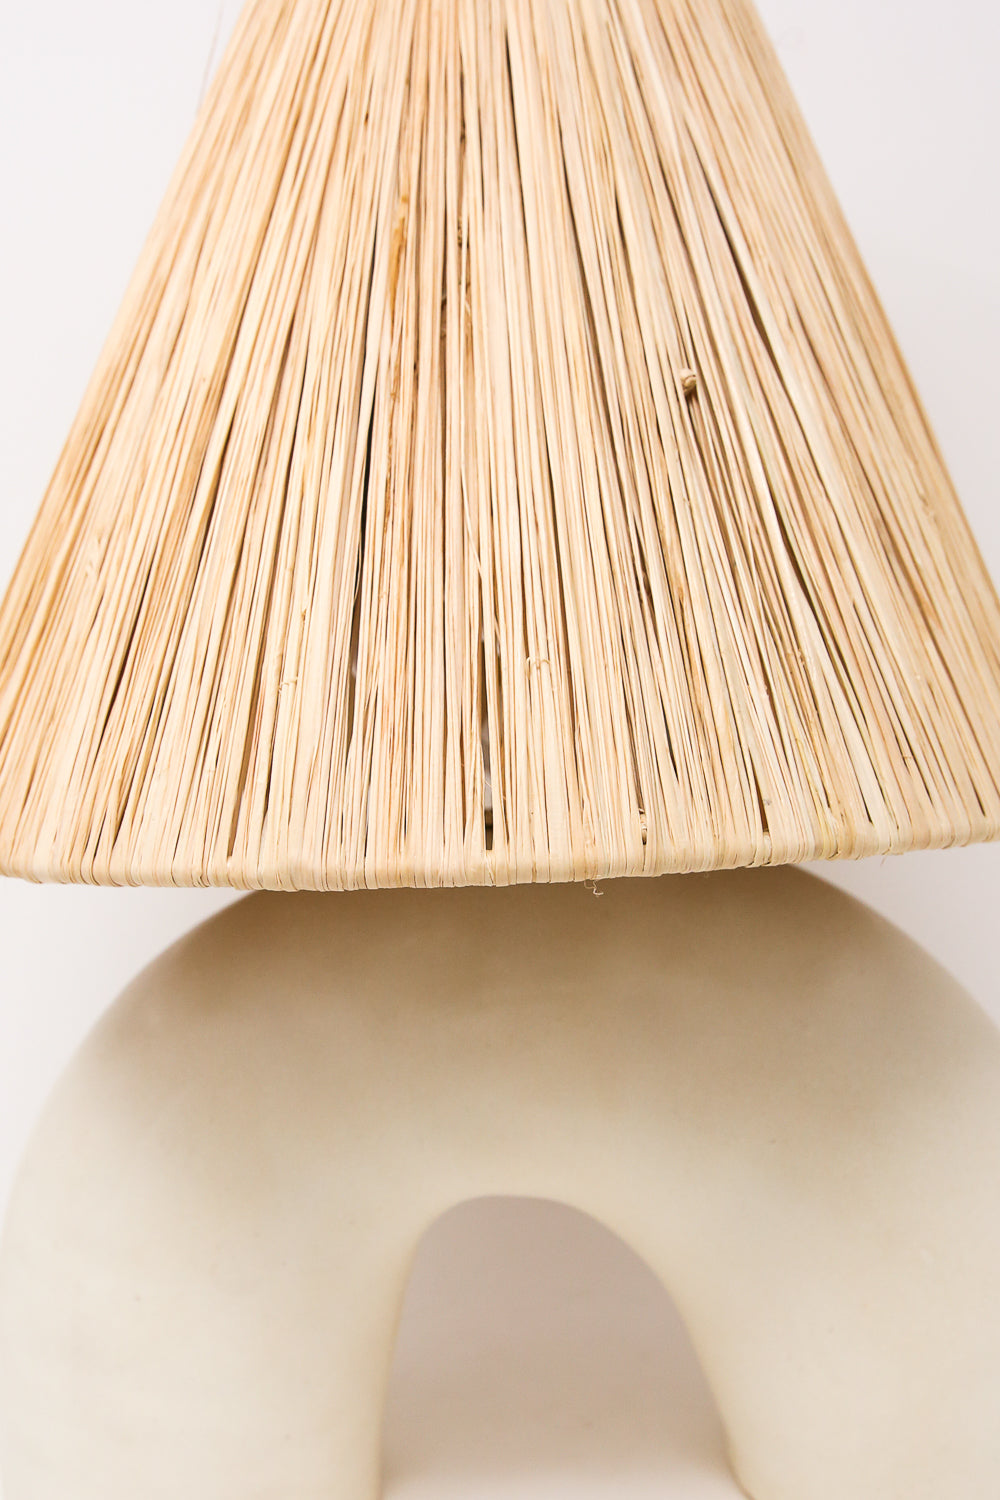 Marta Bonilla Volta Lamp in White detail view